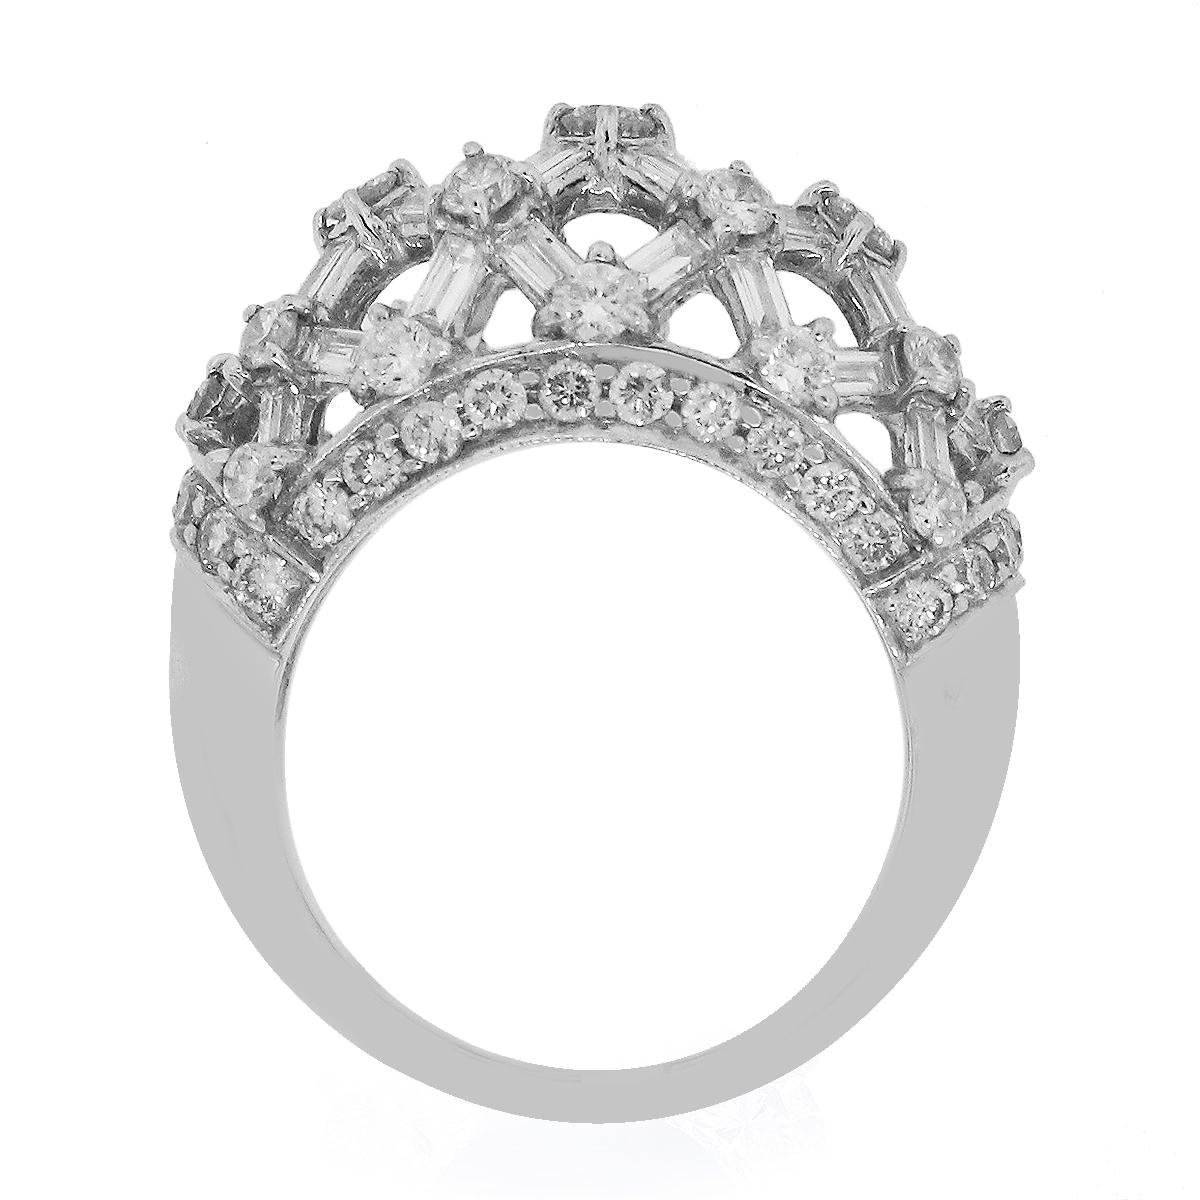 3.04 Carat Diamond Ring In Excellent Condition For Sale In Boca Raton, FL